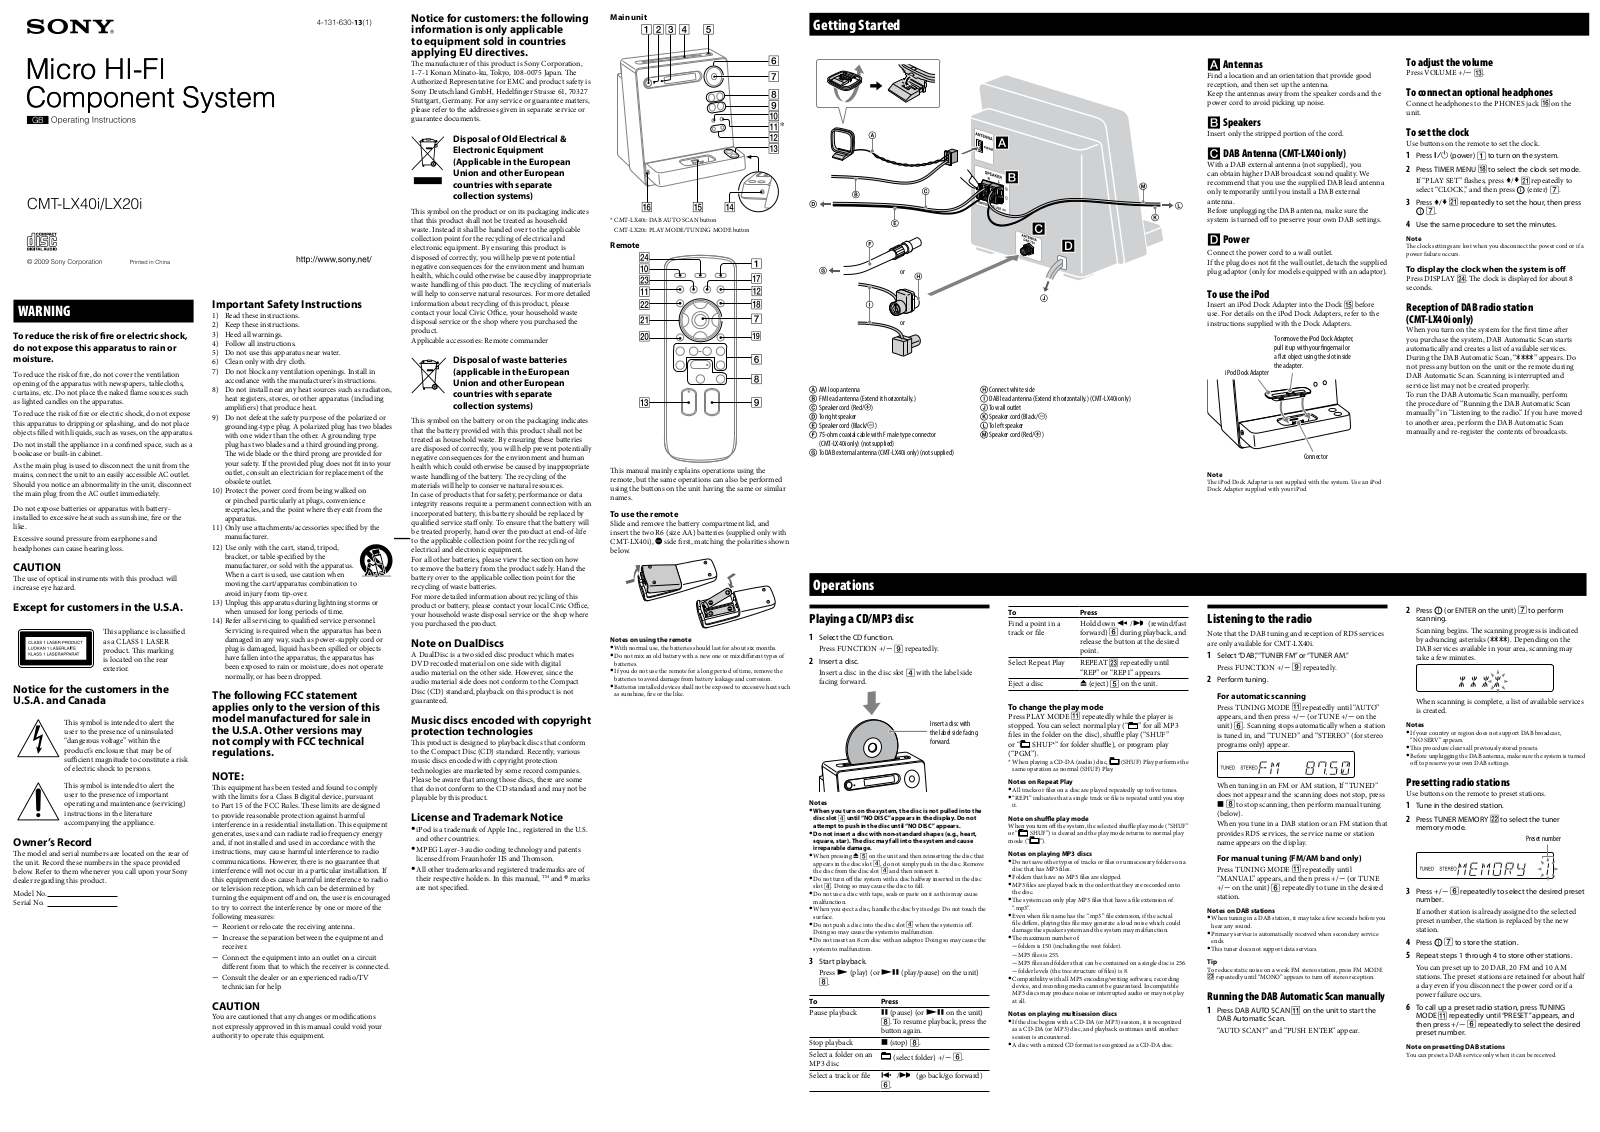 Sony CMT-LX40I, LX20I User Manual